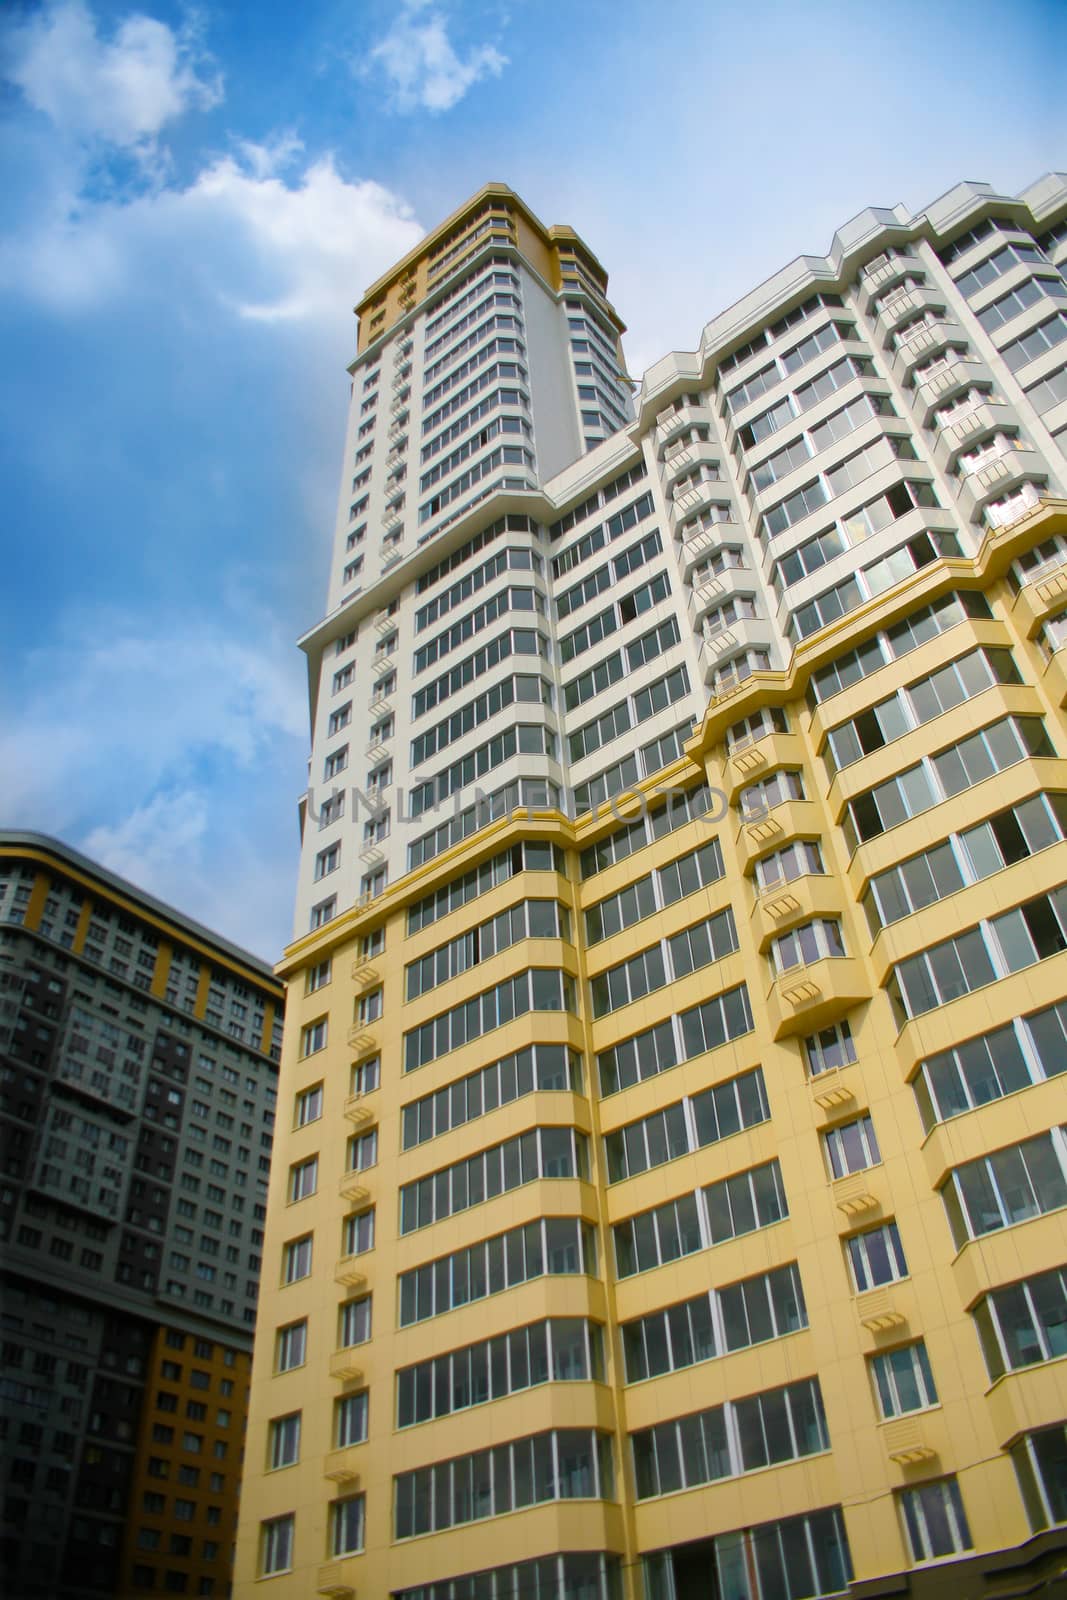 New modern inhabited high-rise building